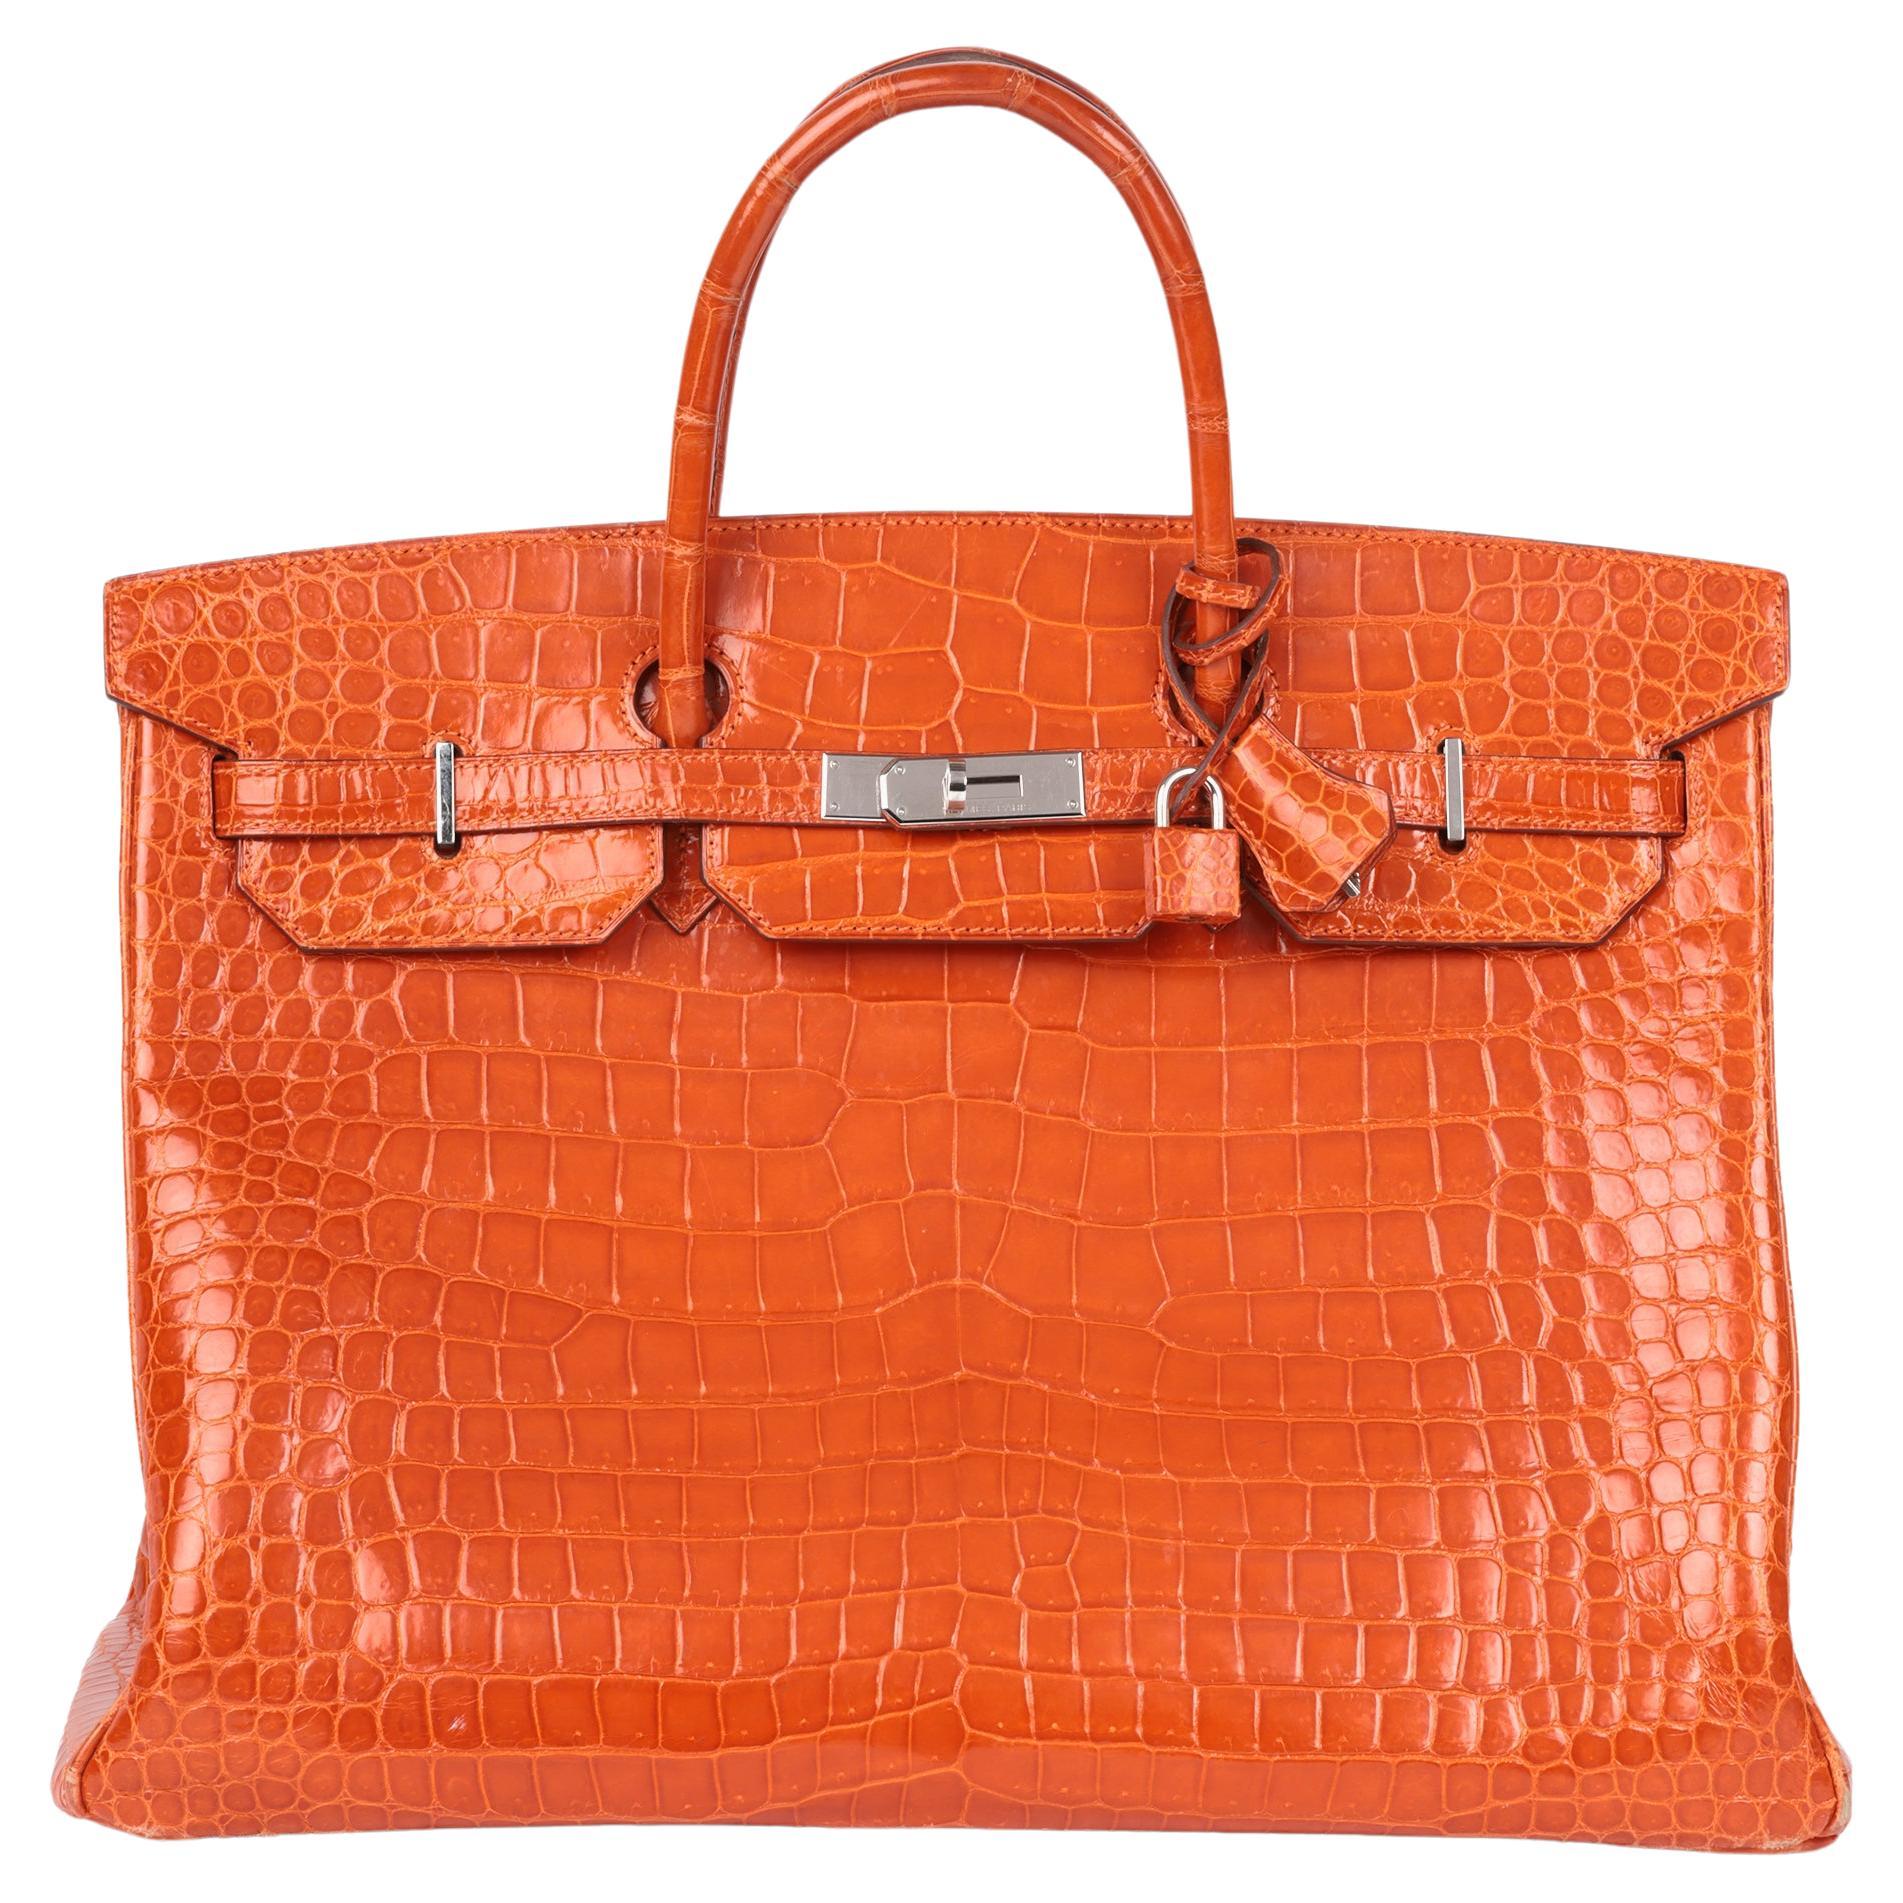 Is a Birkin bag made of crocodile?